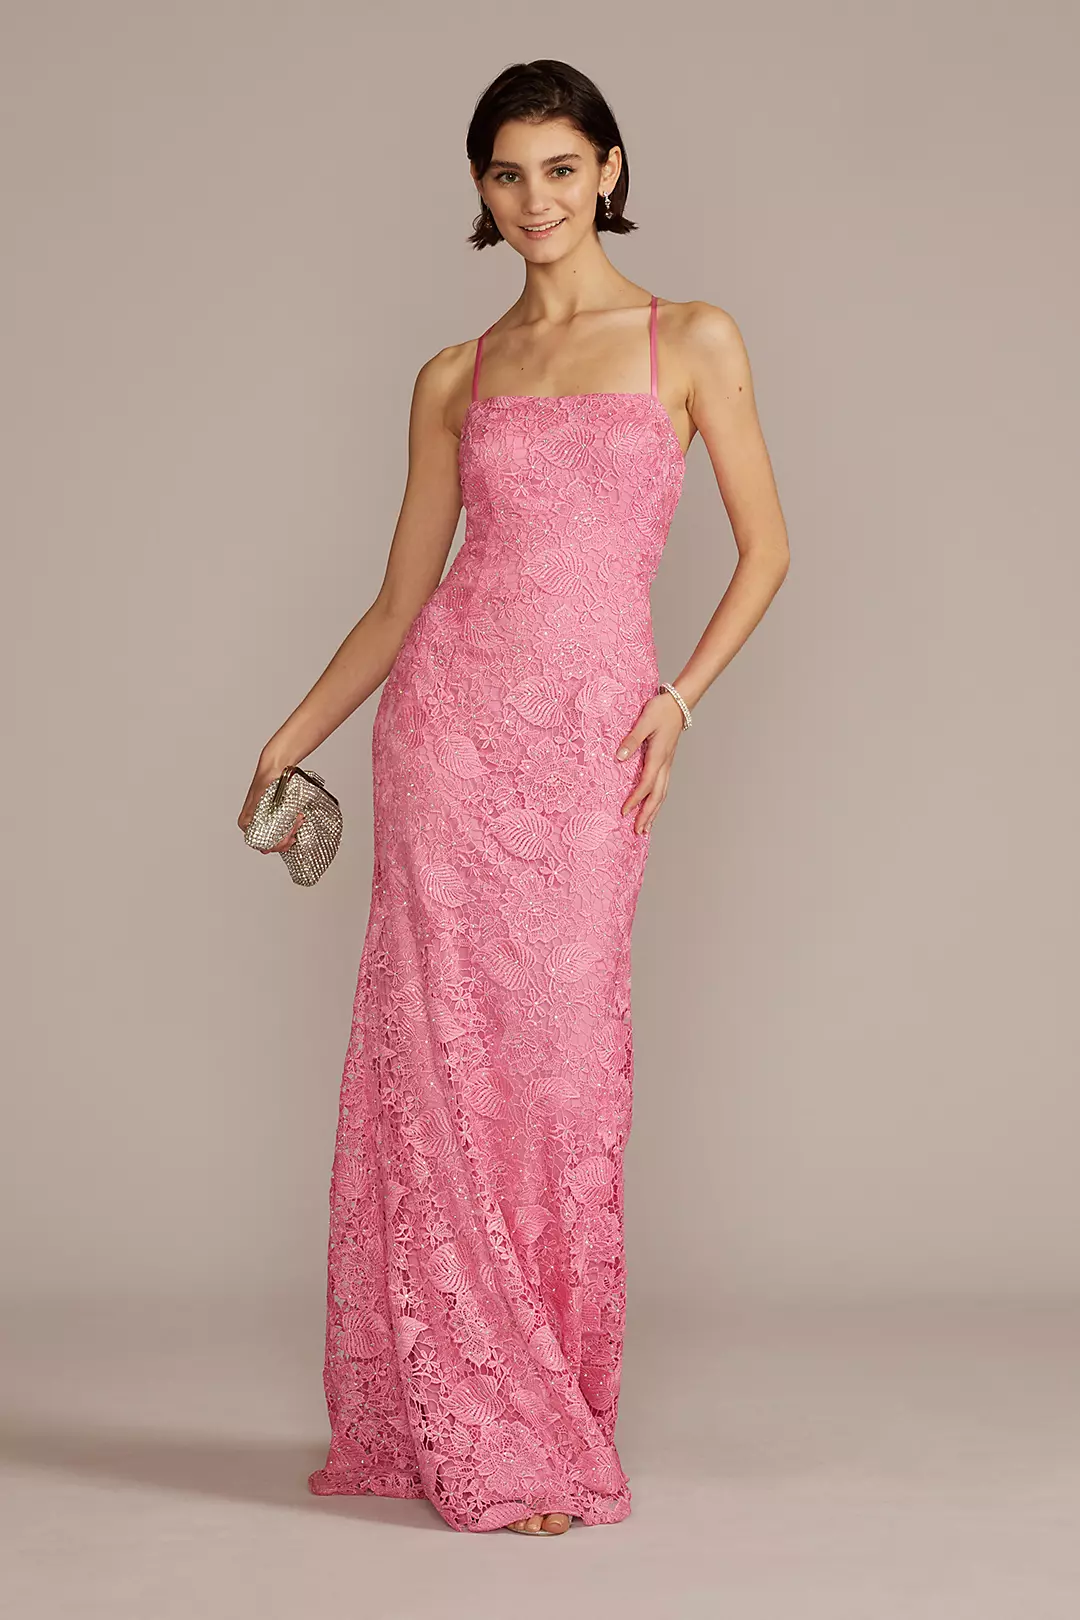 Square Neck Floor Length Lace Prom Dress | David's Bridal